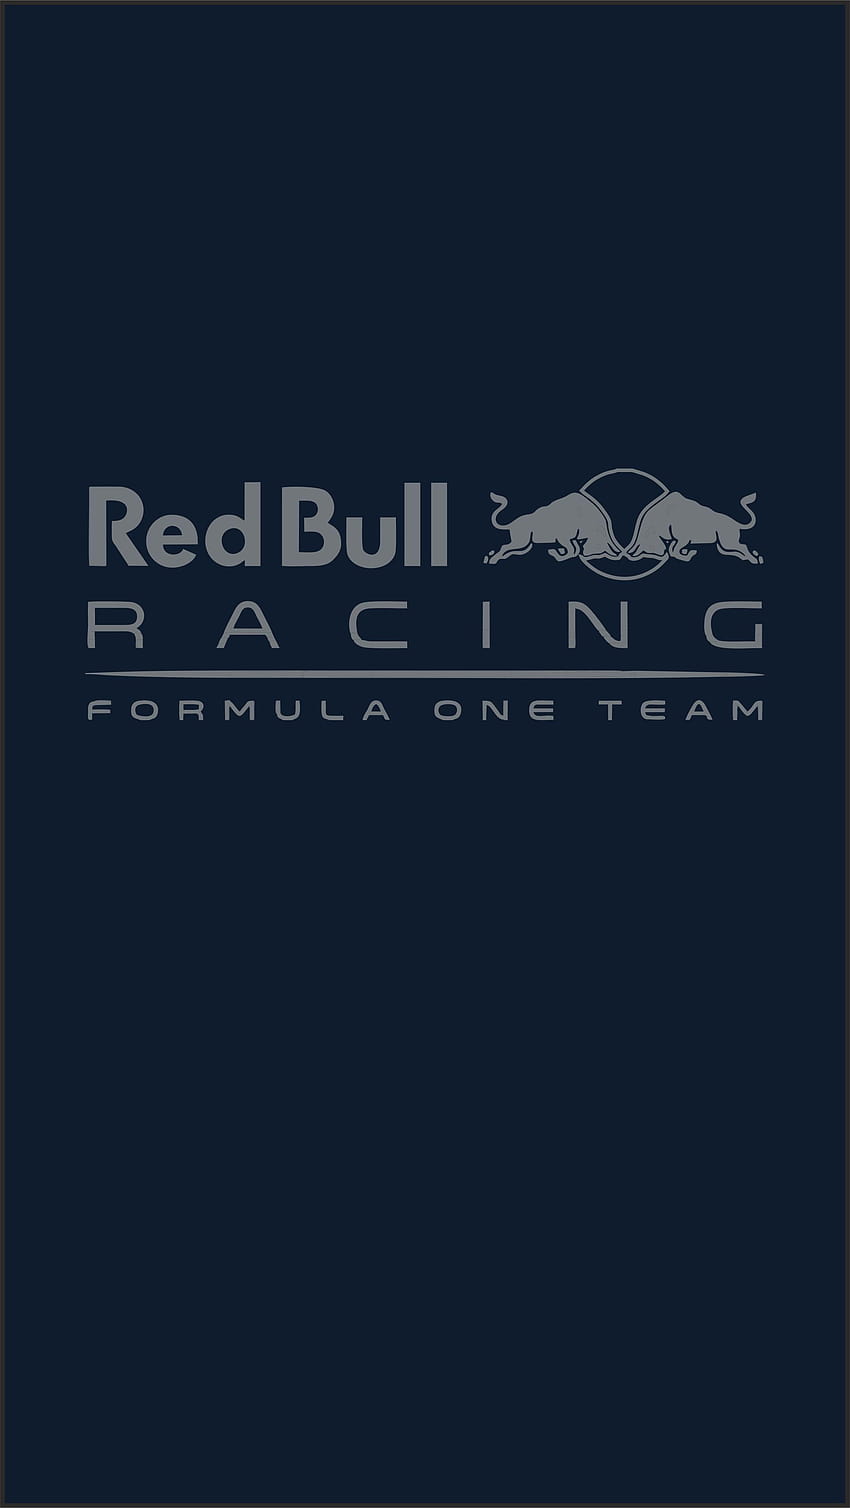 sobre Red Bull Logos Monster energy ×, red bull racing logo Papel de parede de celular HD